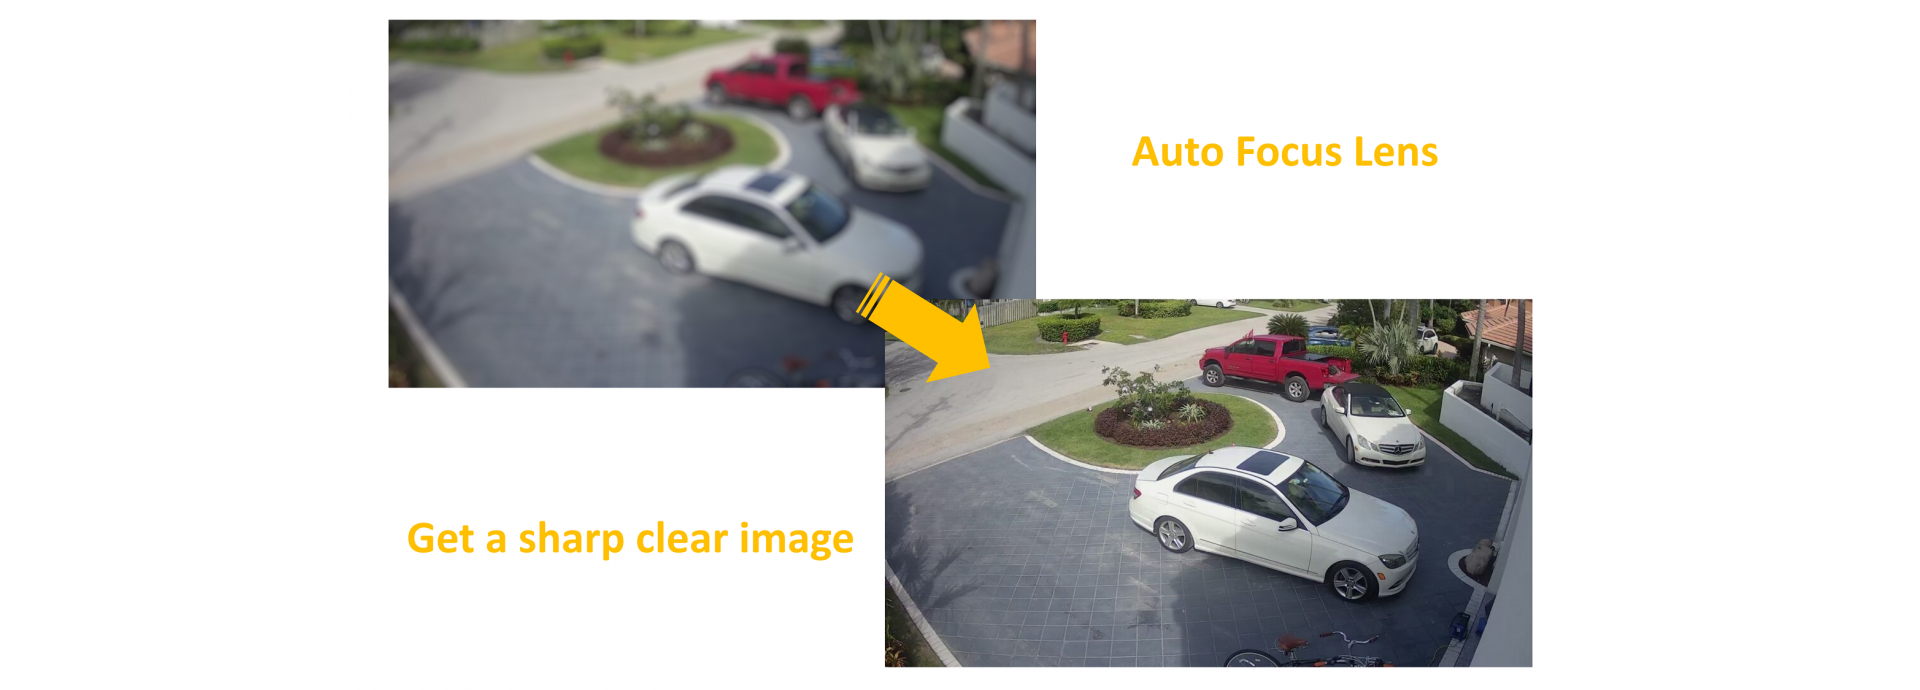 2.8-12 mm Motorized Auto focus lens, 4x Optical Zoom